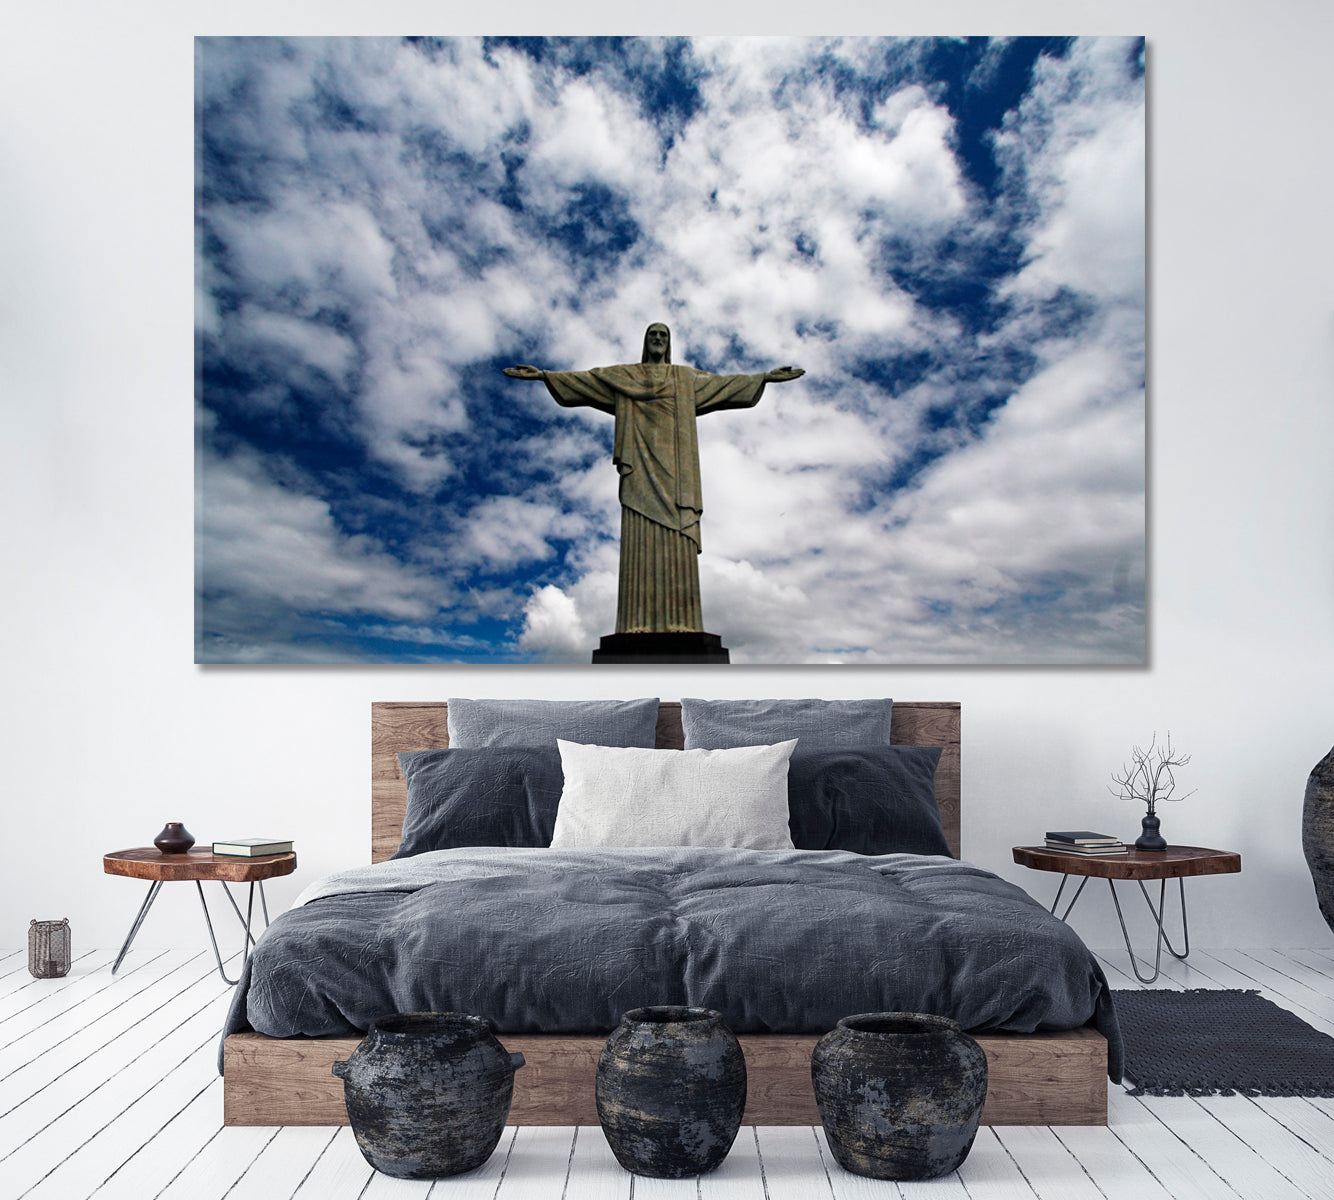 Statue of Christ the Redeemer Rio de Janeiro Brazil Canvas Print ArtLexy 1 Panel 24"x16" inches 